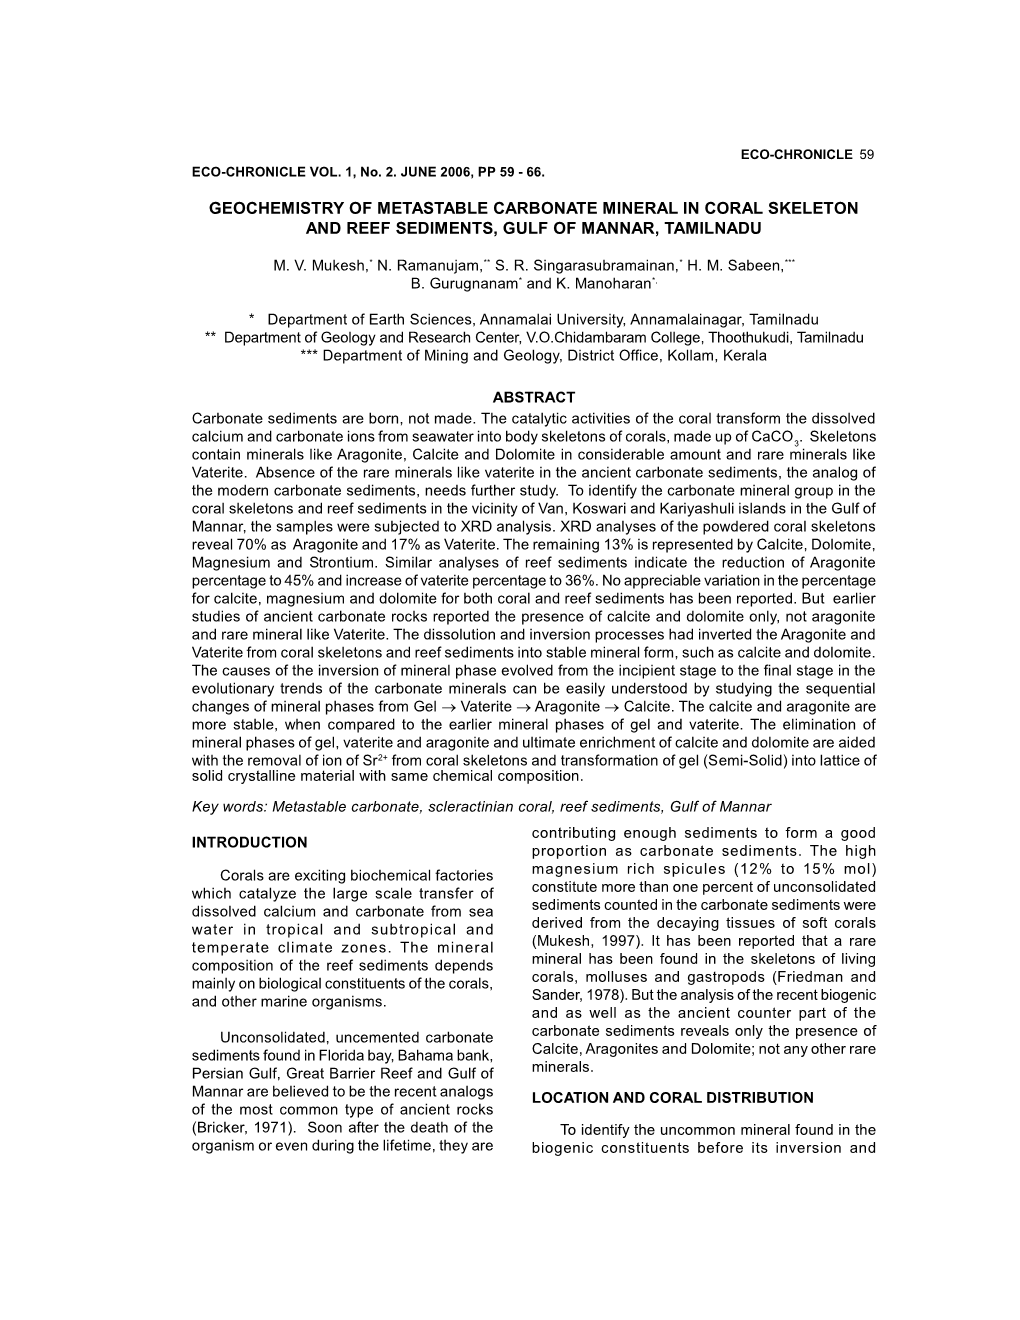 Geochemistry of Metastable Carbonate Mineral in Coral Skeleton and Reef Sediments, Gulf of Mannar, Tamilnadu